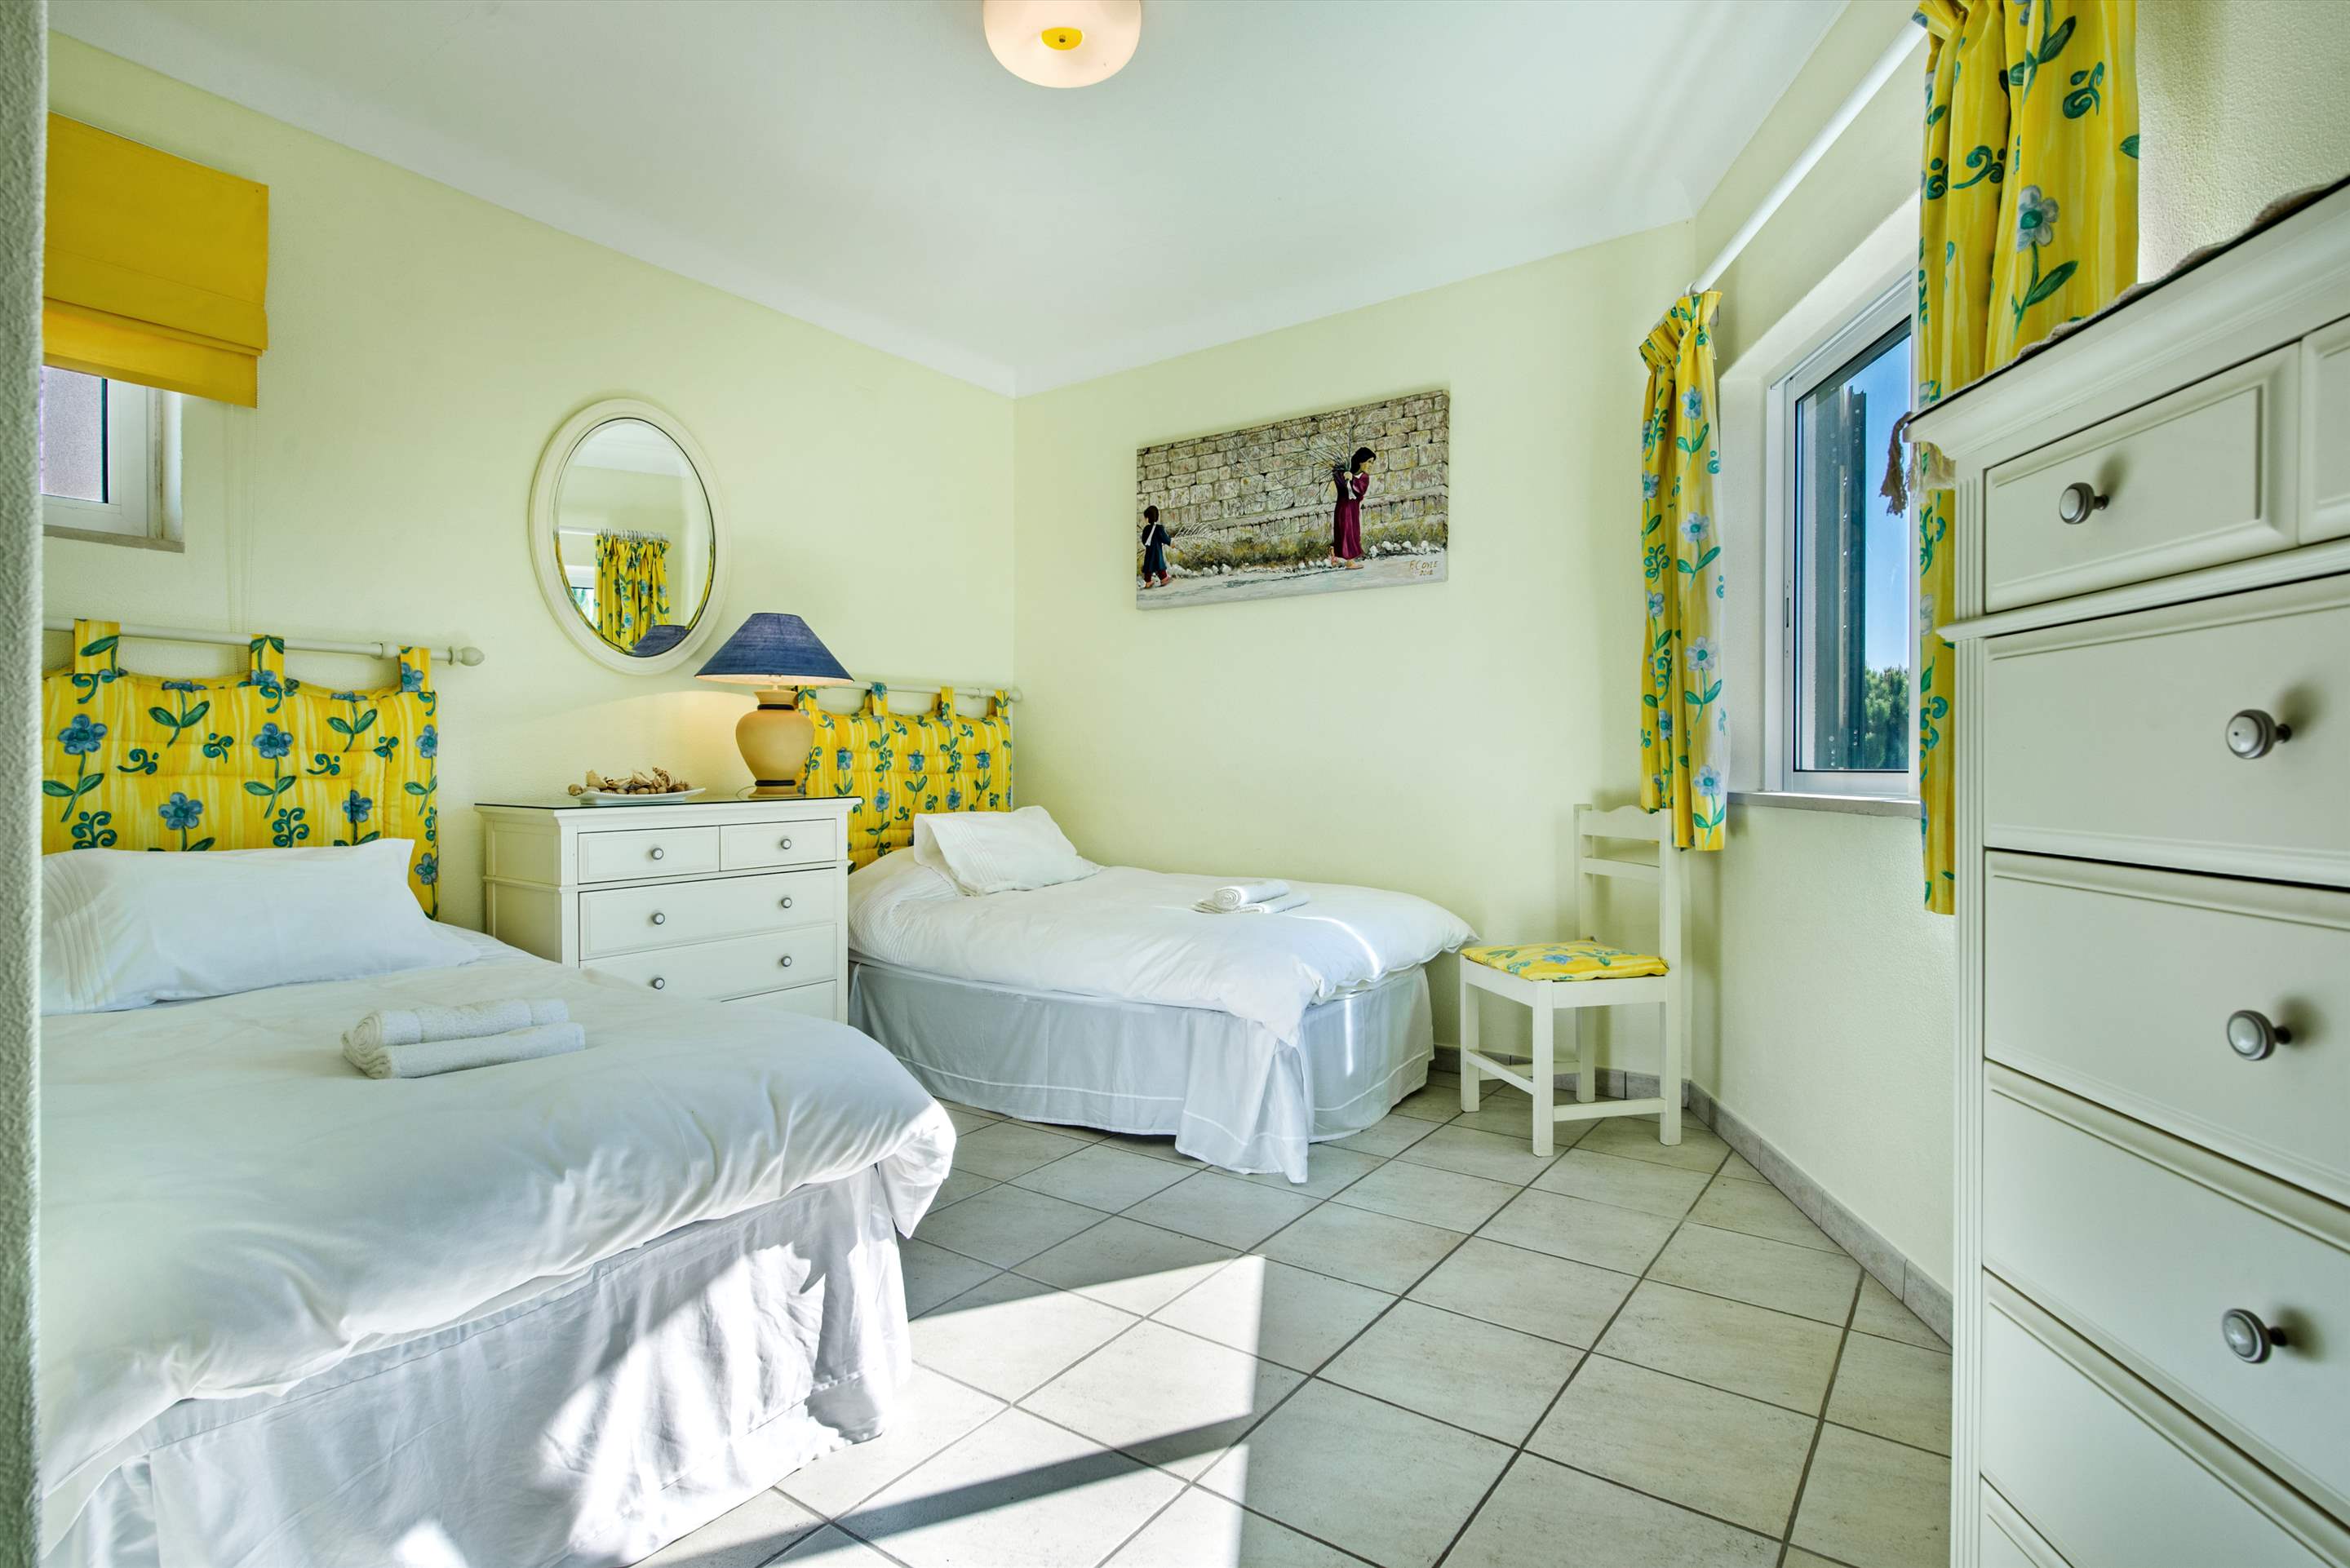 Julieta do Mar, 3 bedroom villa in Gale, Vale da Parra and Guia, Algarve Photo #17